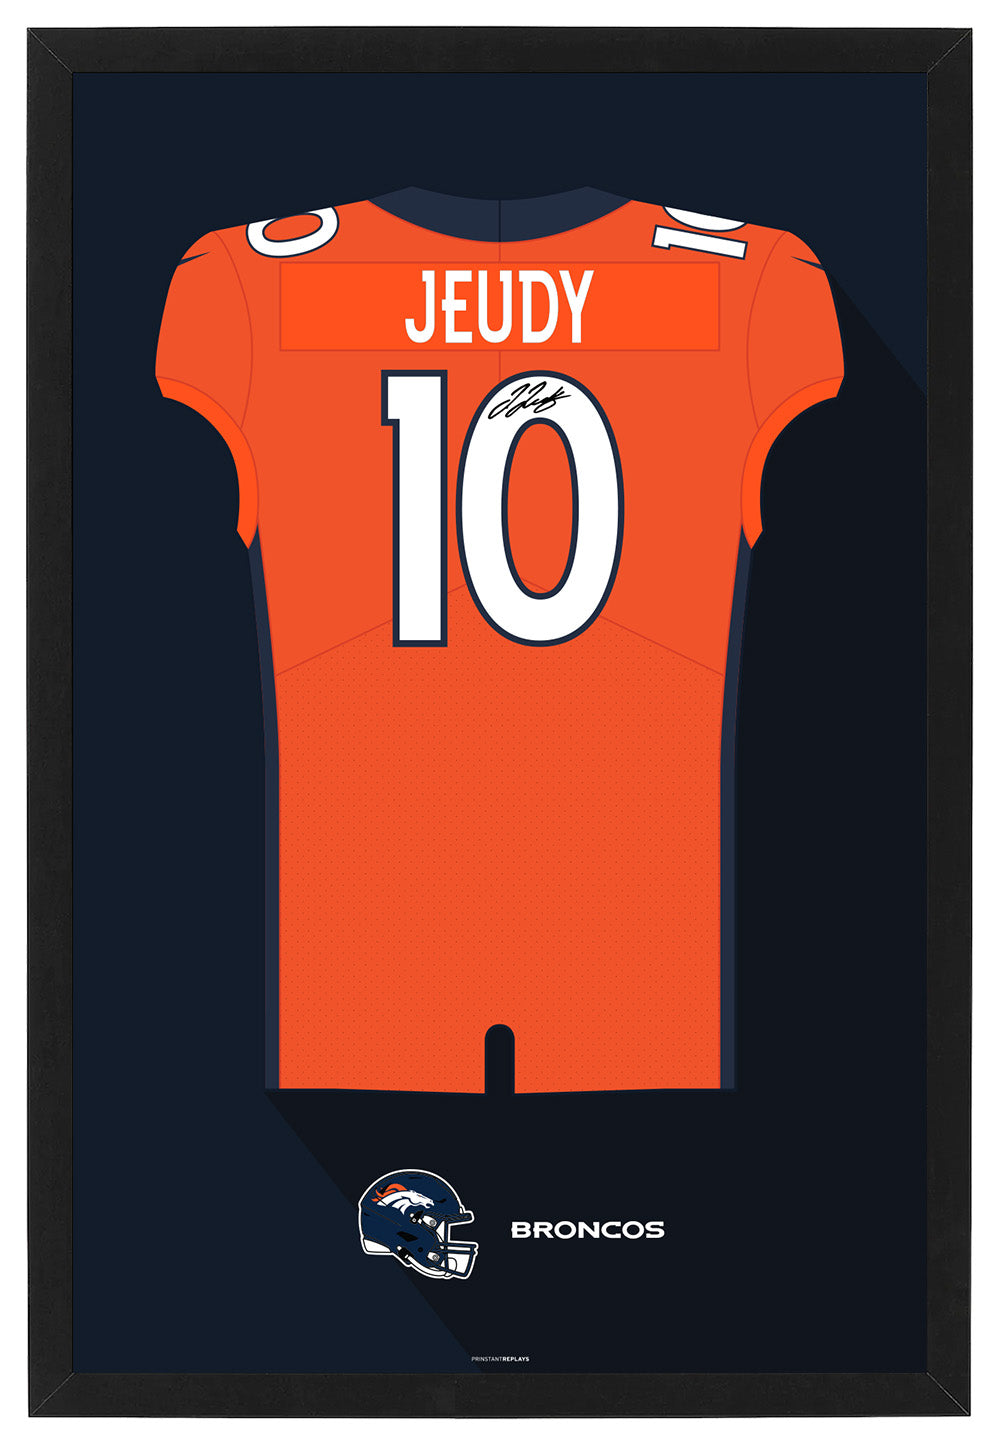 Denver Broncos Jerry Jeudy Autographed Jersey Framed Print